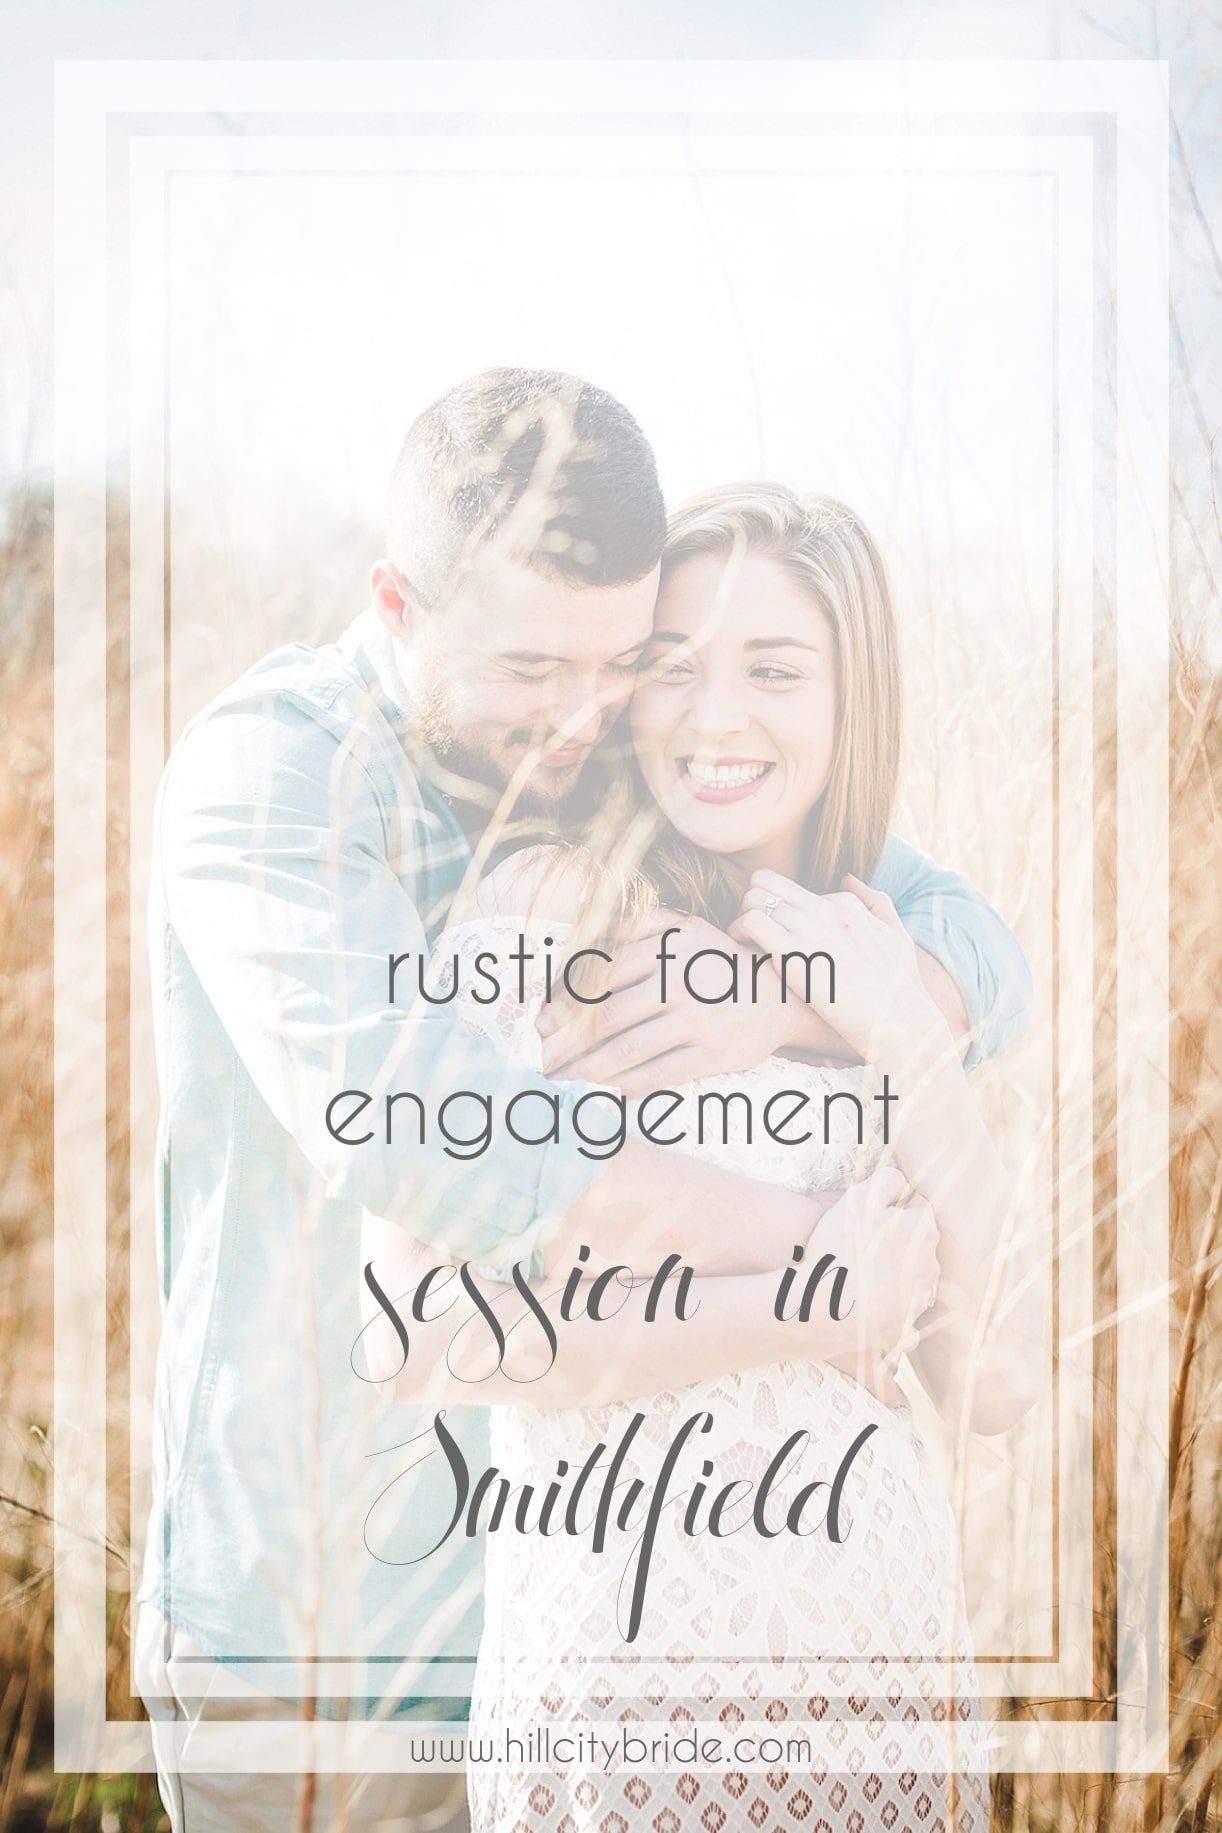 Rustic Farm Engagement Session in Smithfield Virginia | Hill City Bride Wedding Blog